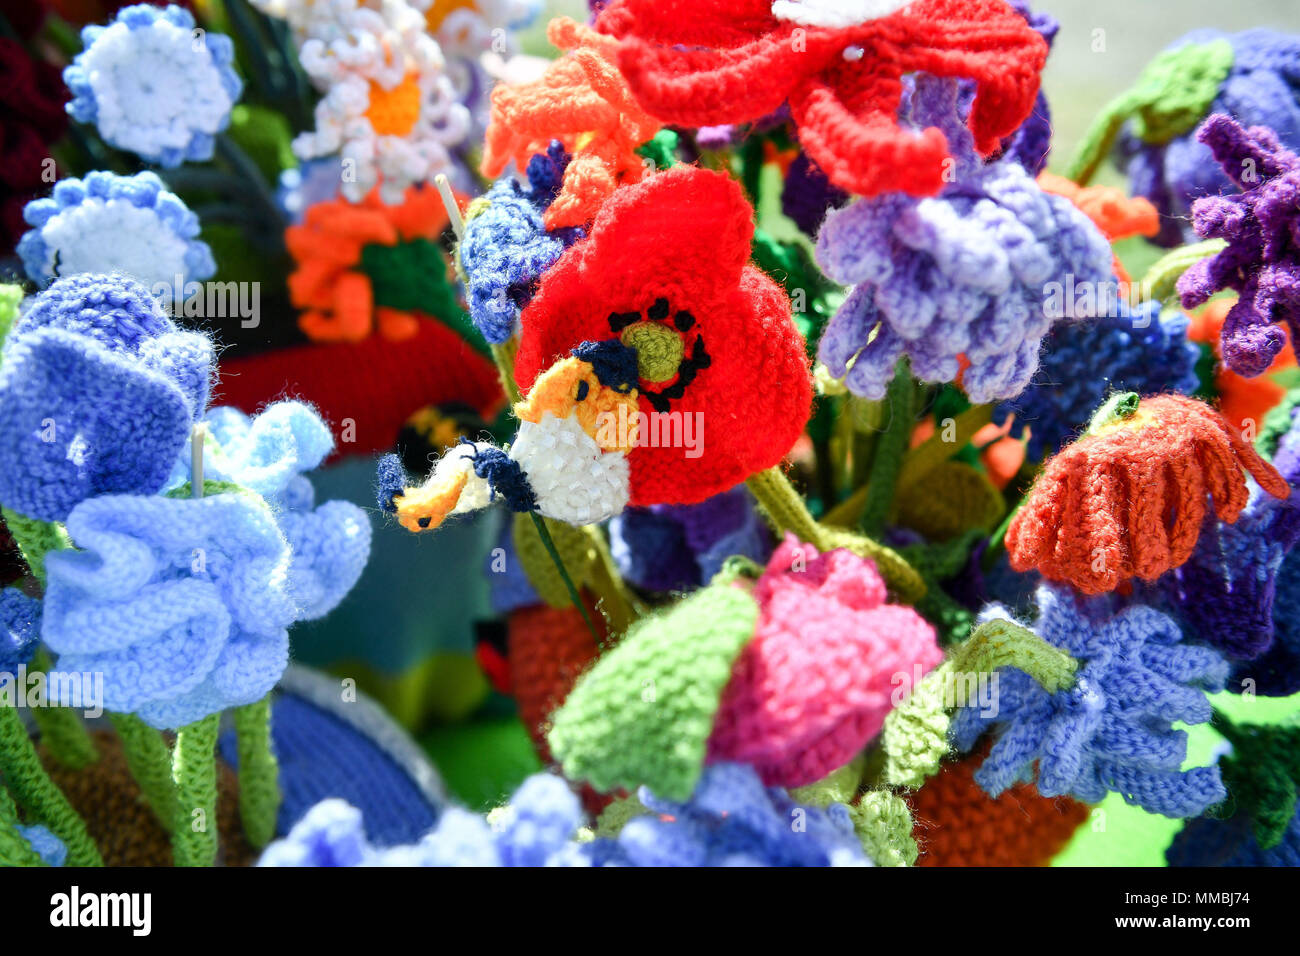 Flores de punto fotografías e imágenes de alta resolución - Alamy